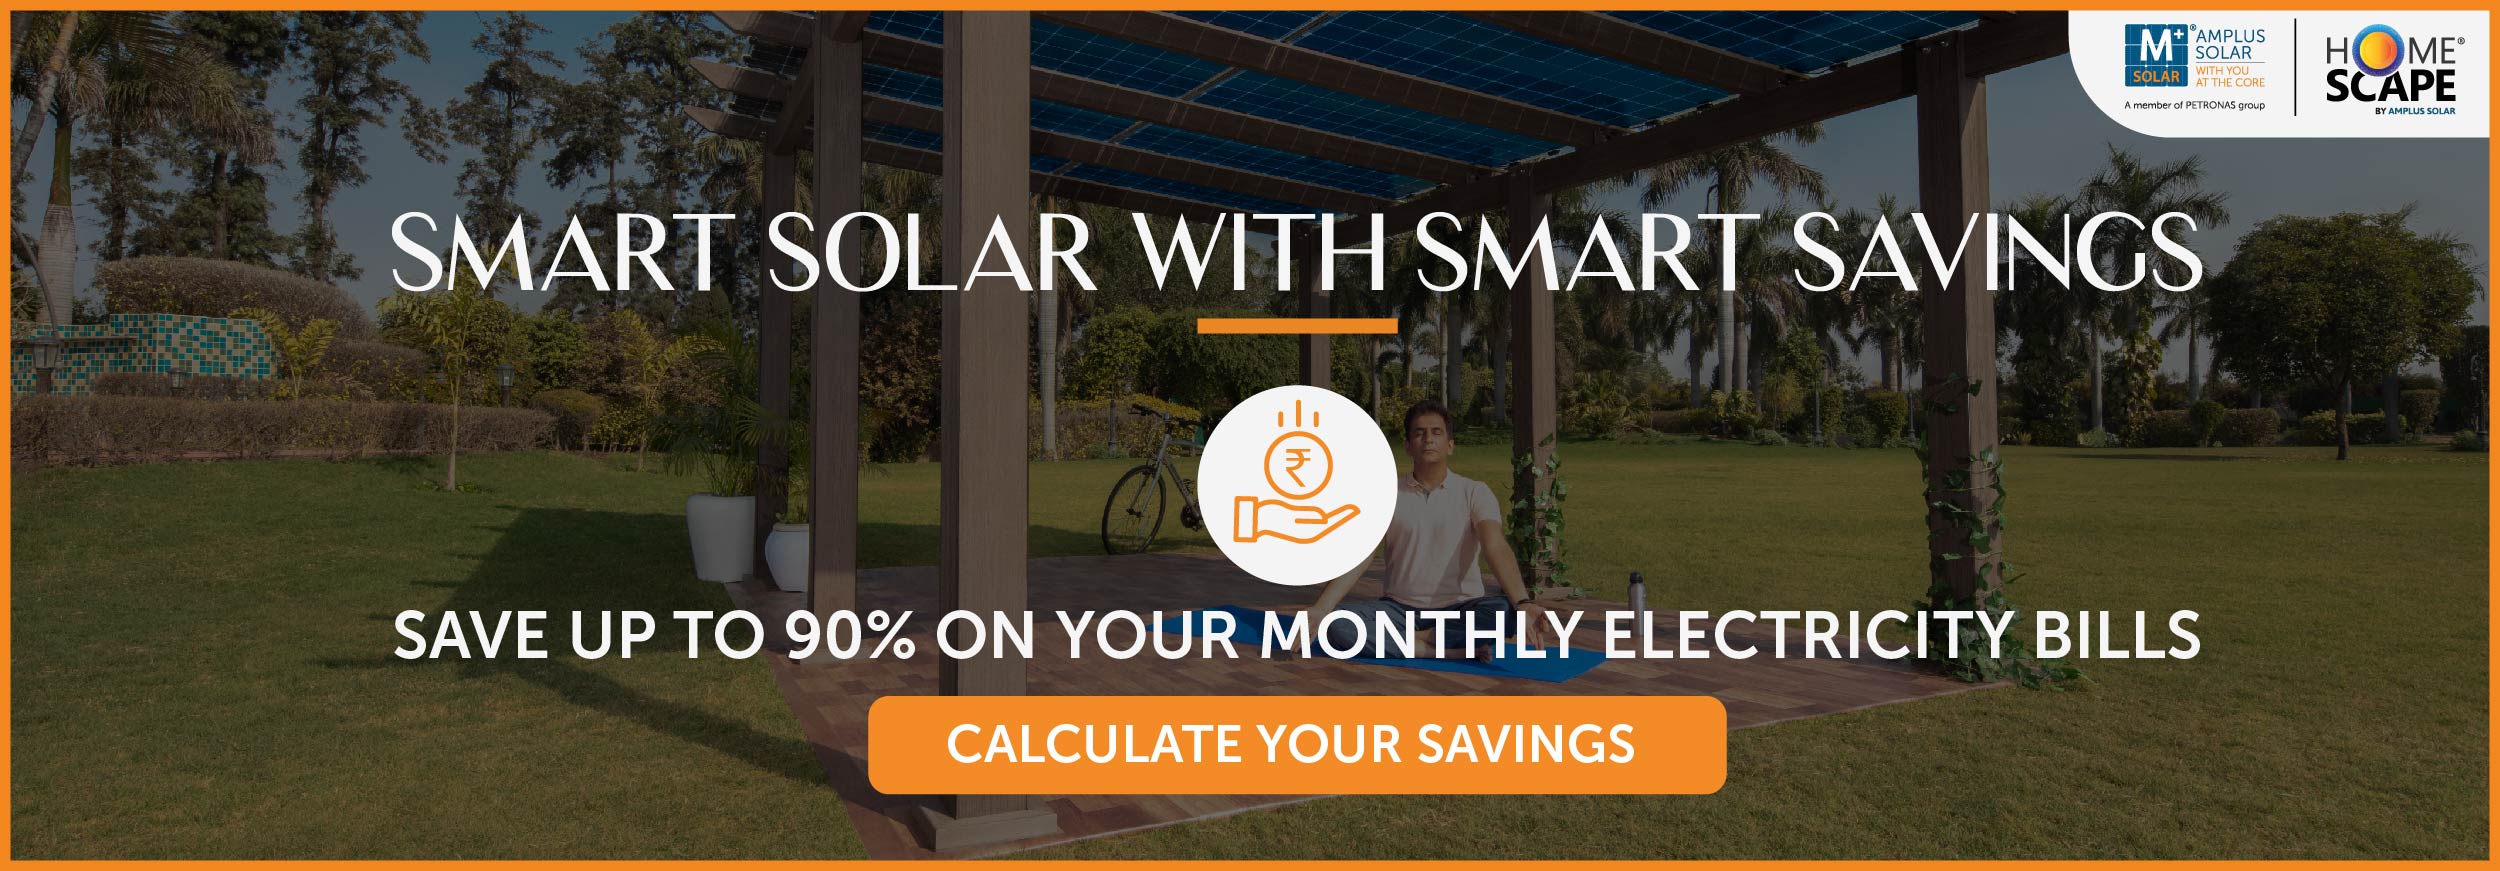 90% saving on electricity bills